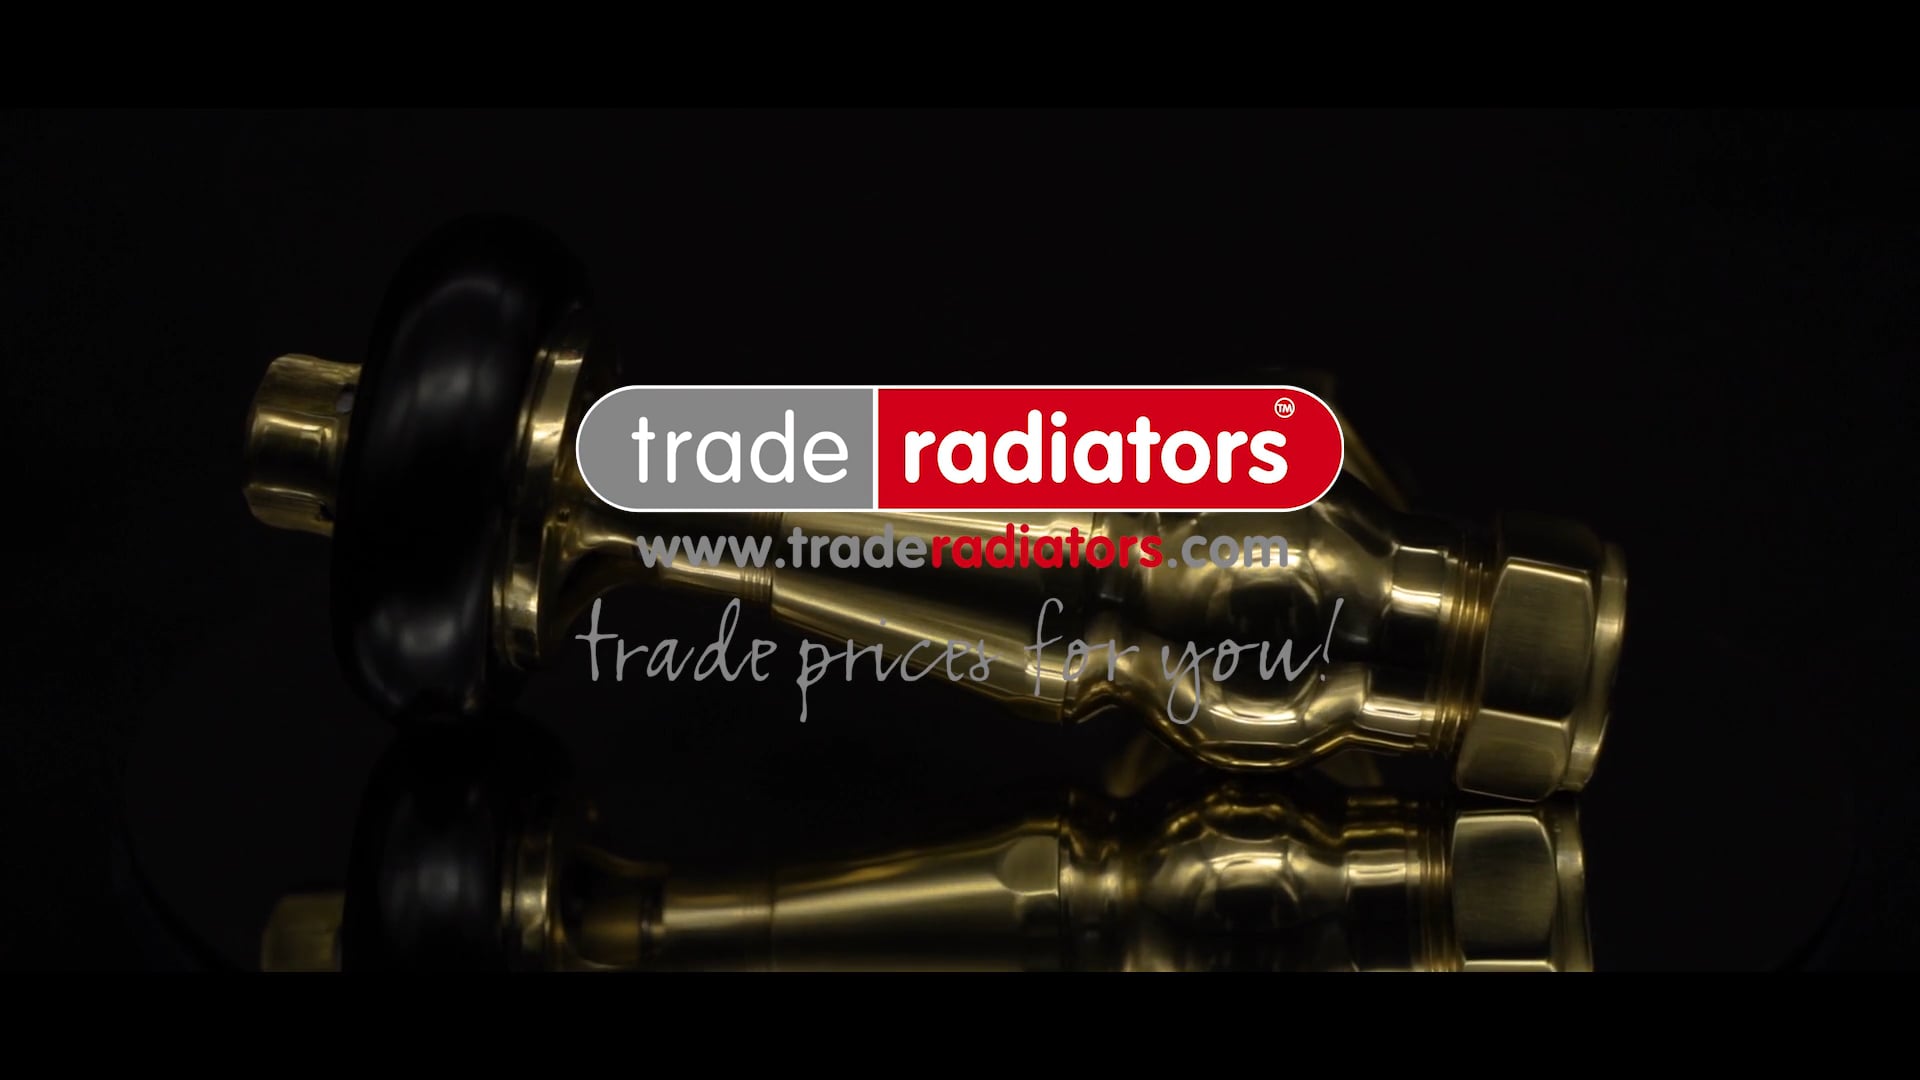 Trade Radiators Valve Promo